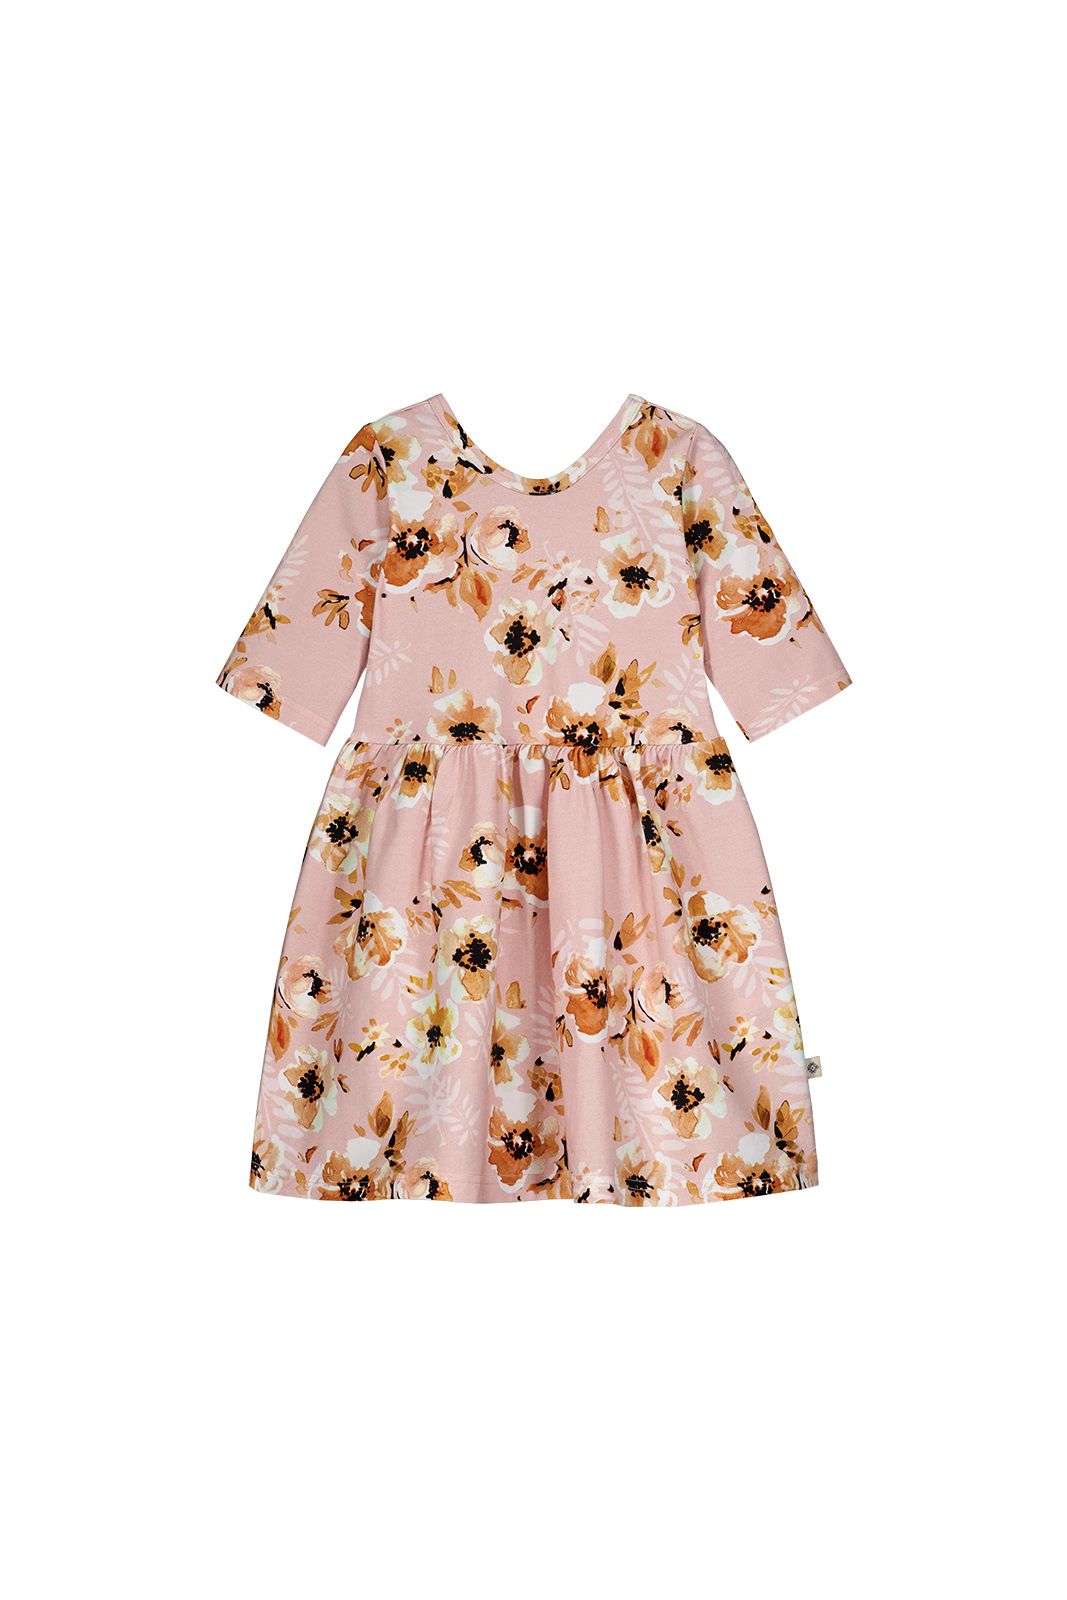 KAIKO - Kids Dress 3/4 - Pastel Bouquet 3